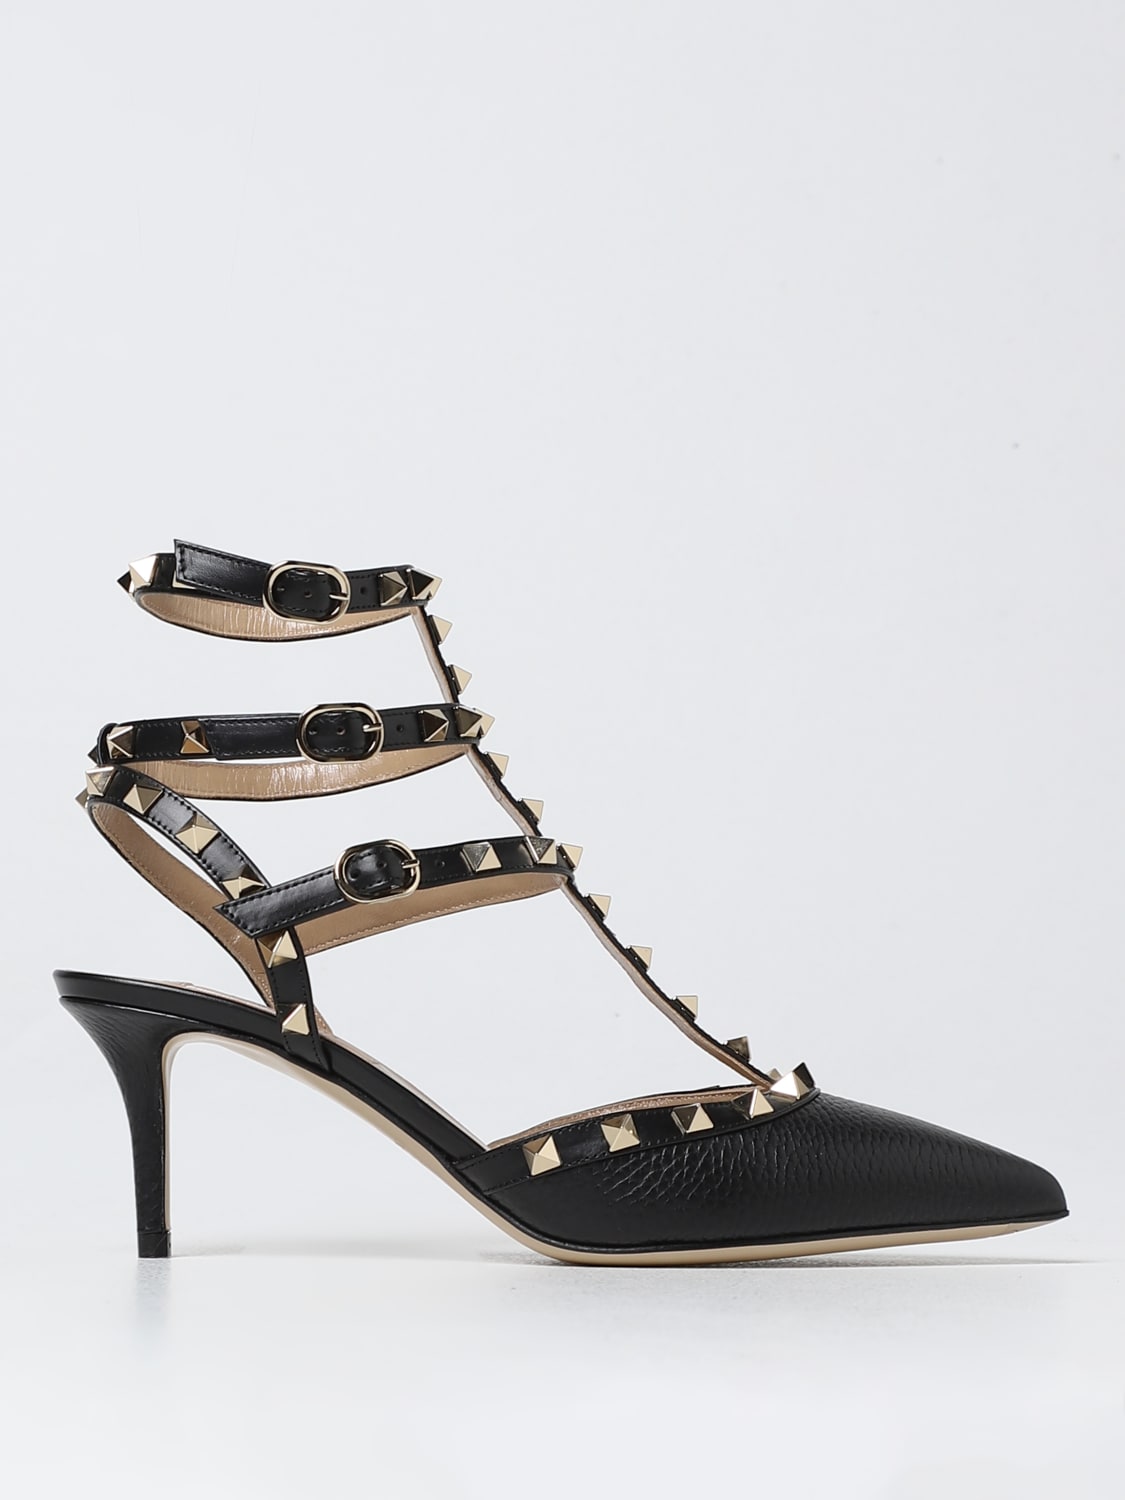 seng tårn kyst VALENTINO GARAVANI: high heel shoes for woman - Black | Valentino Garavani  high heel shoes 3W2S0375VCE online on GIGLIO.COM